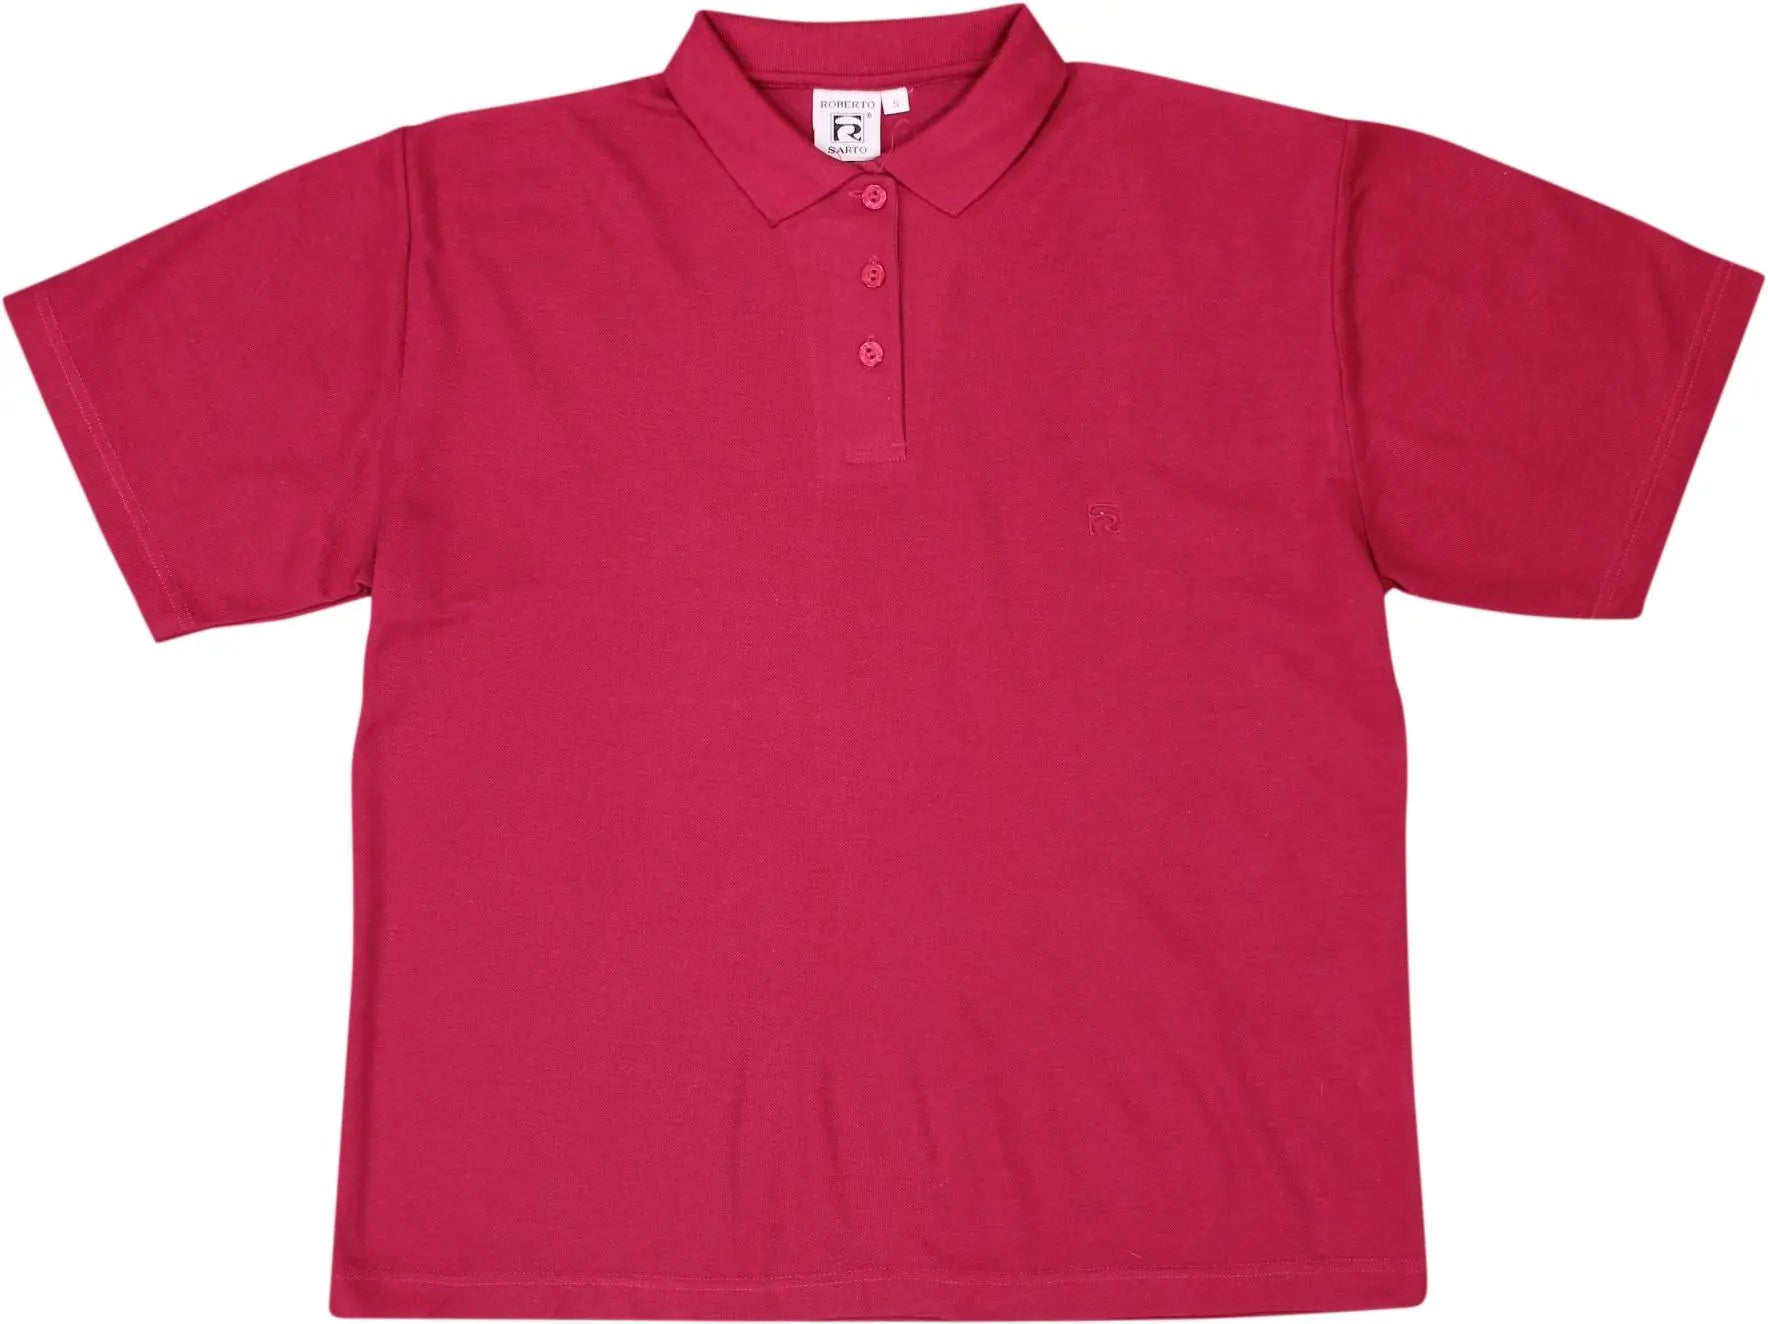 Roberto Sarto - Pink Polo Shirt by Roberto Sarto- ThriftTale.com - Vintage and second handclothing